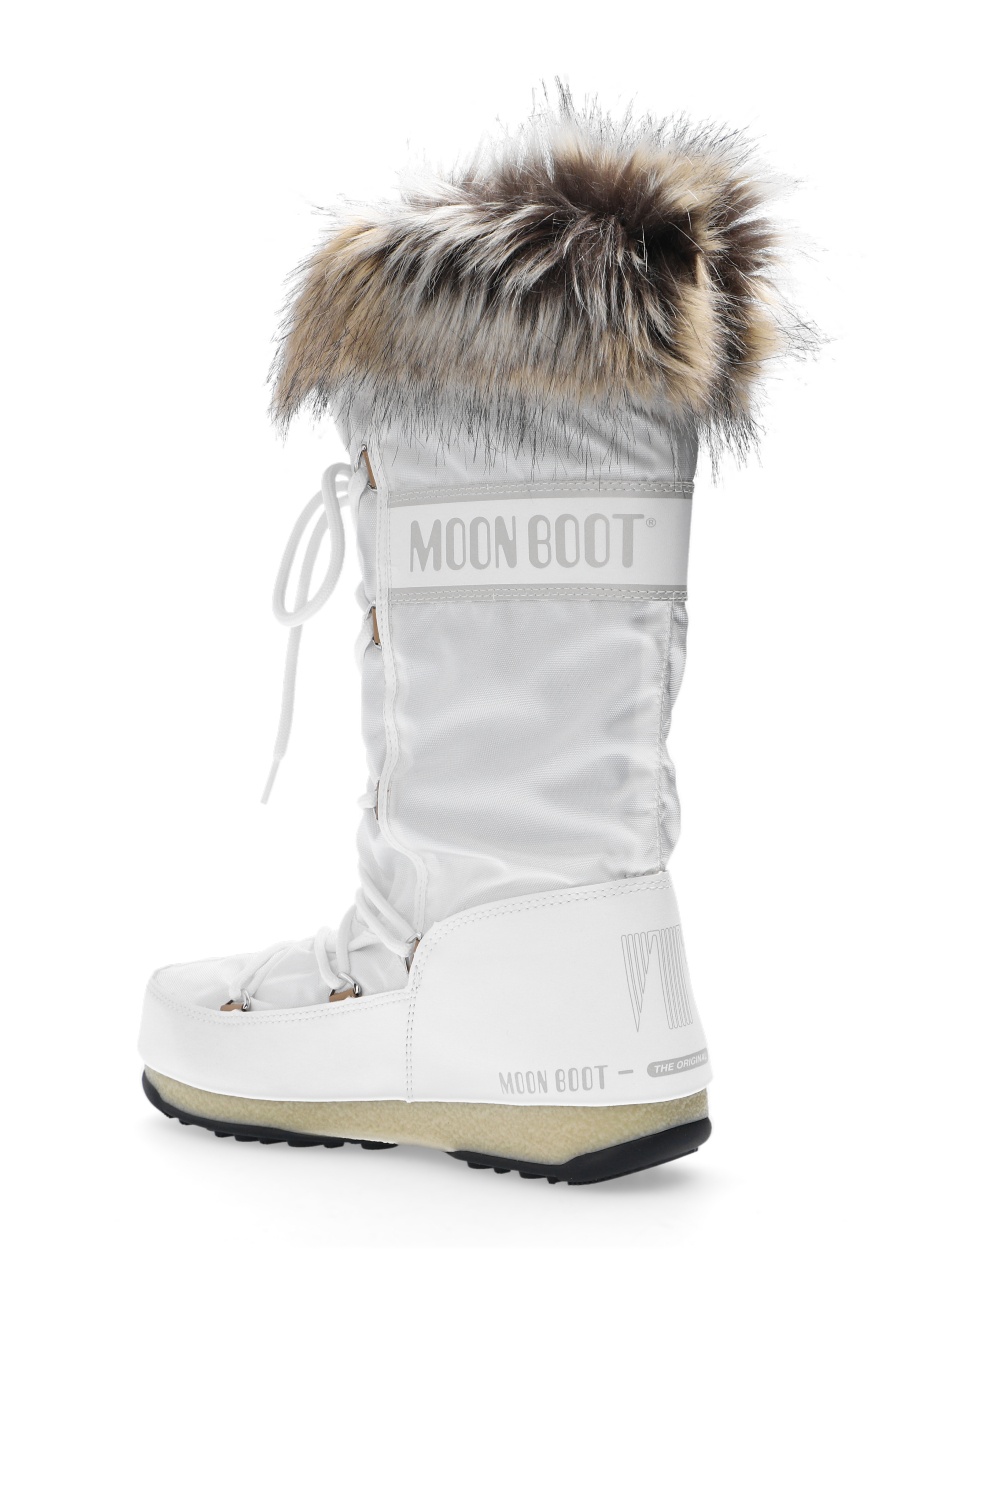 Moon Boot ‘Monaco WP 2’ snow boots